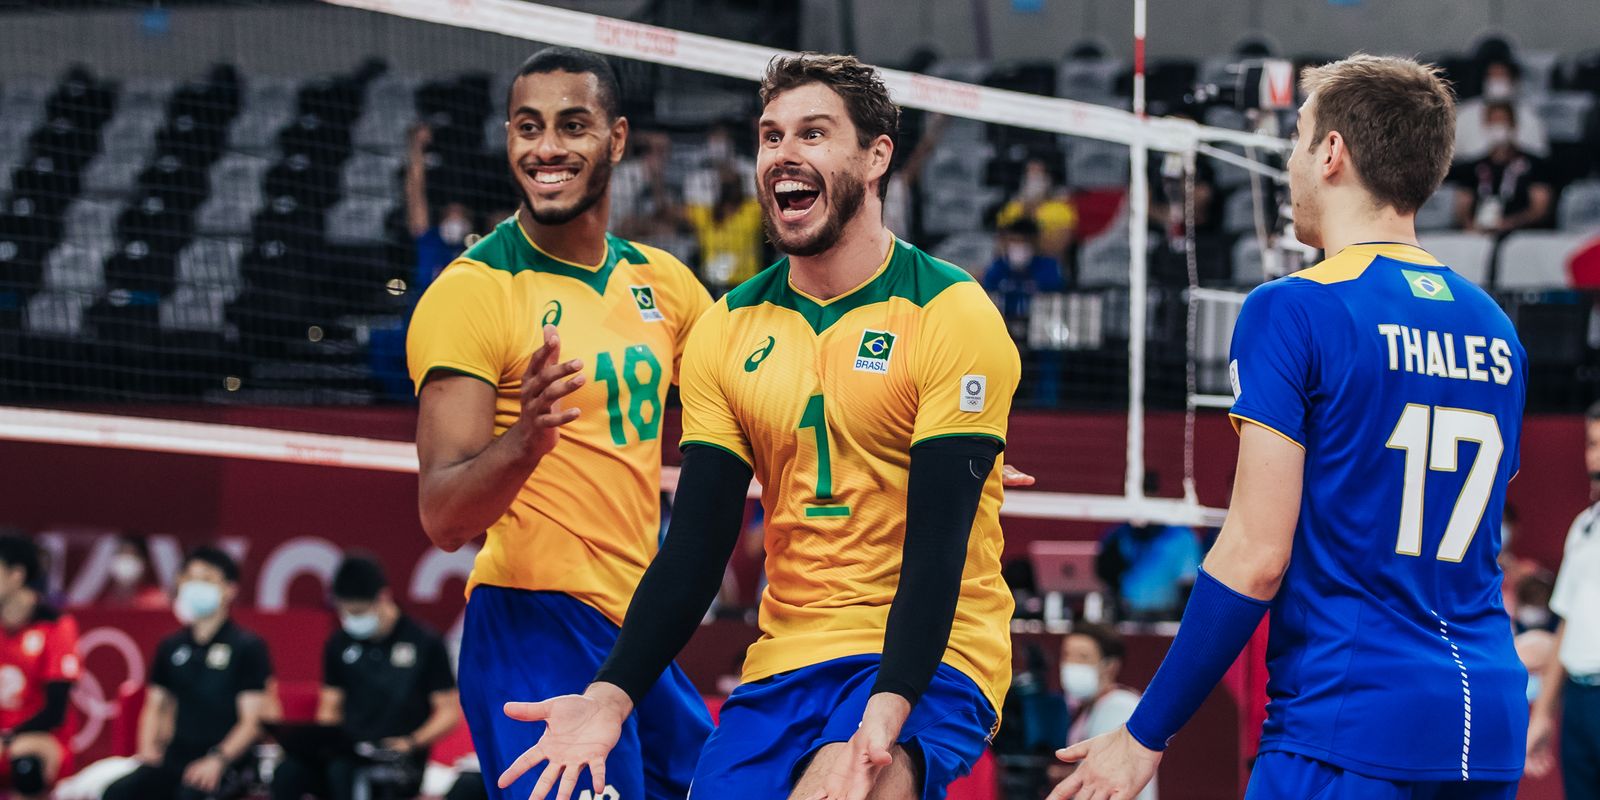 Vôlei: Brasil garante vaga nas oitavas do Mundial de vôlei masculino -  Superesportes